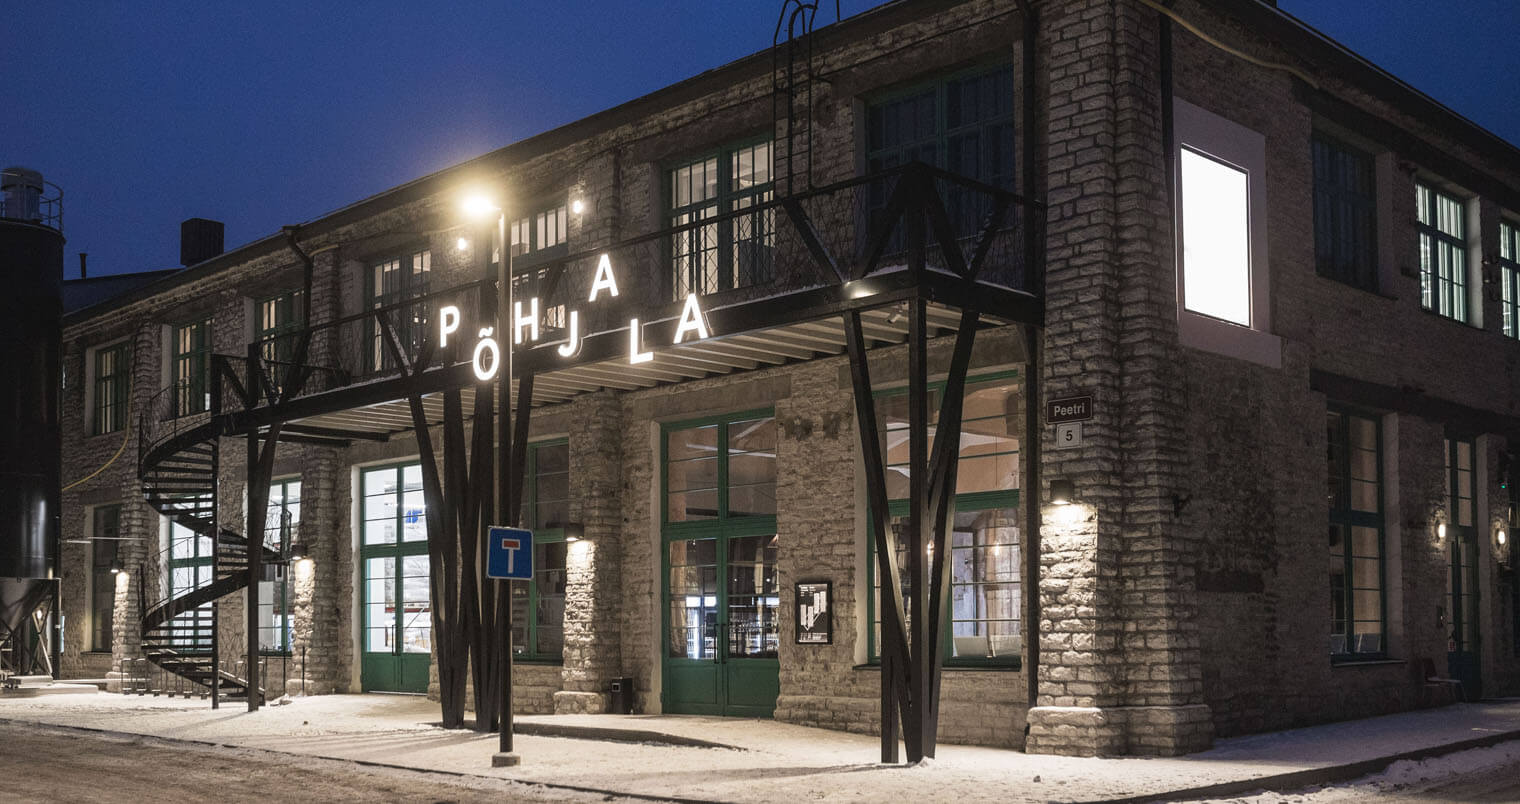 Põhjala Brewery, night shot, featured image